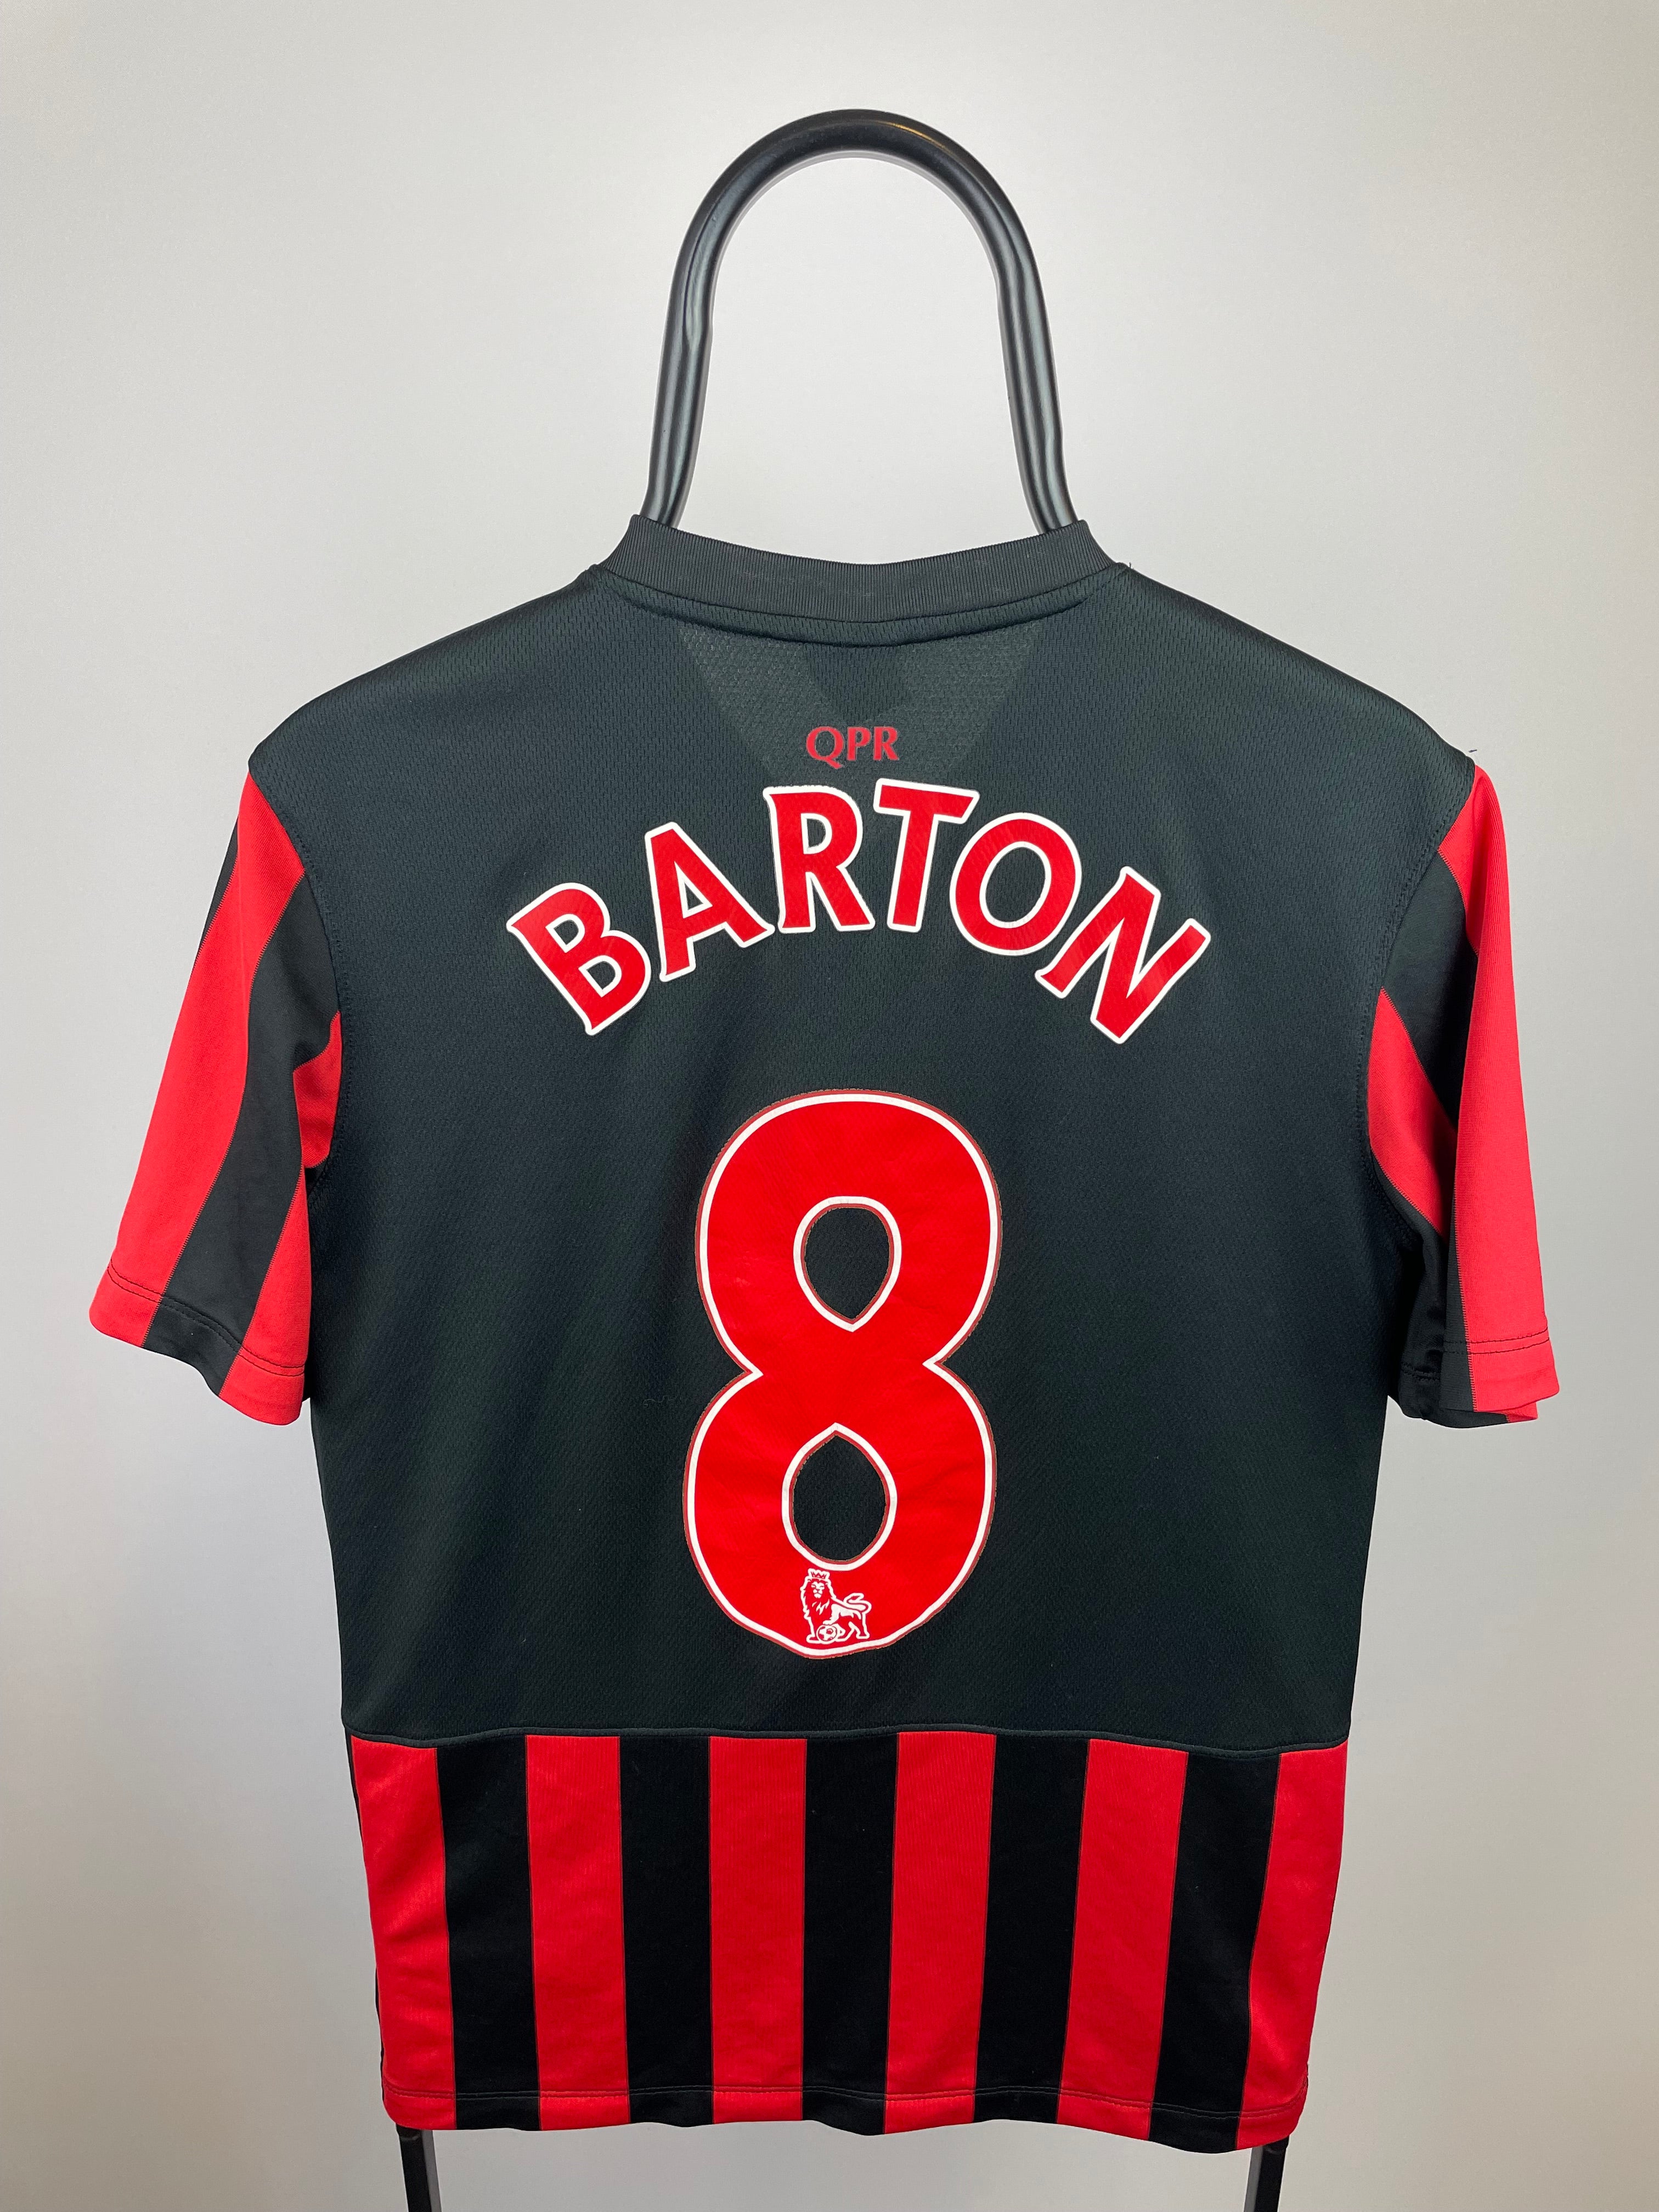 Barton QPR 14/15 udebanetrøje - S